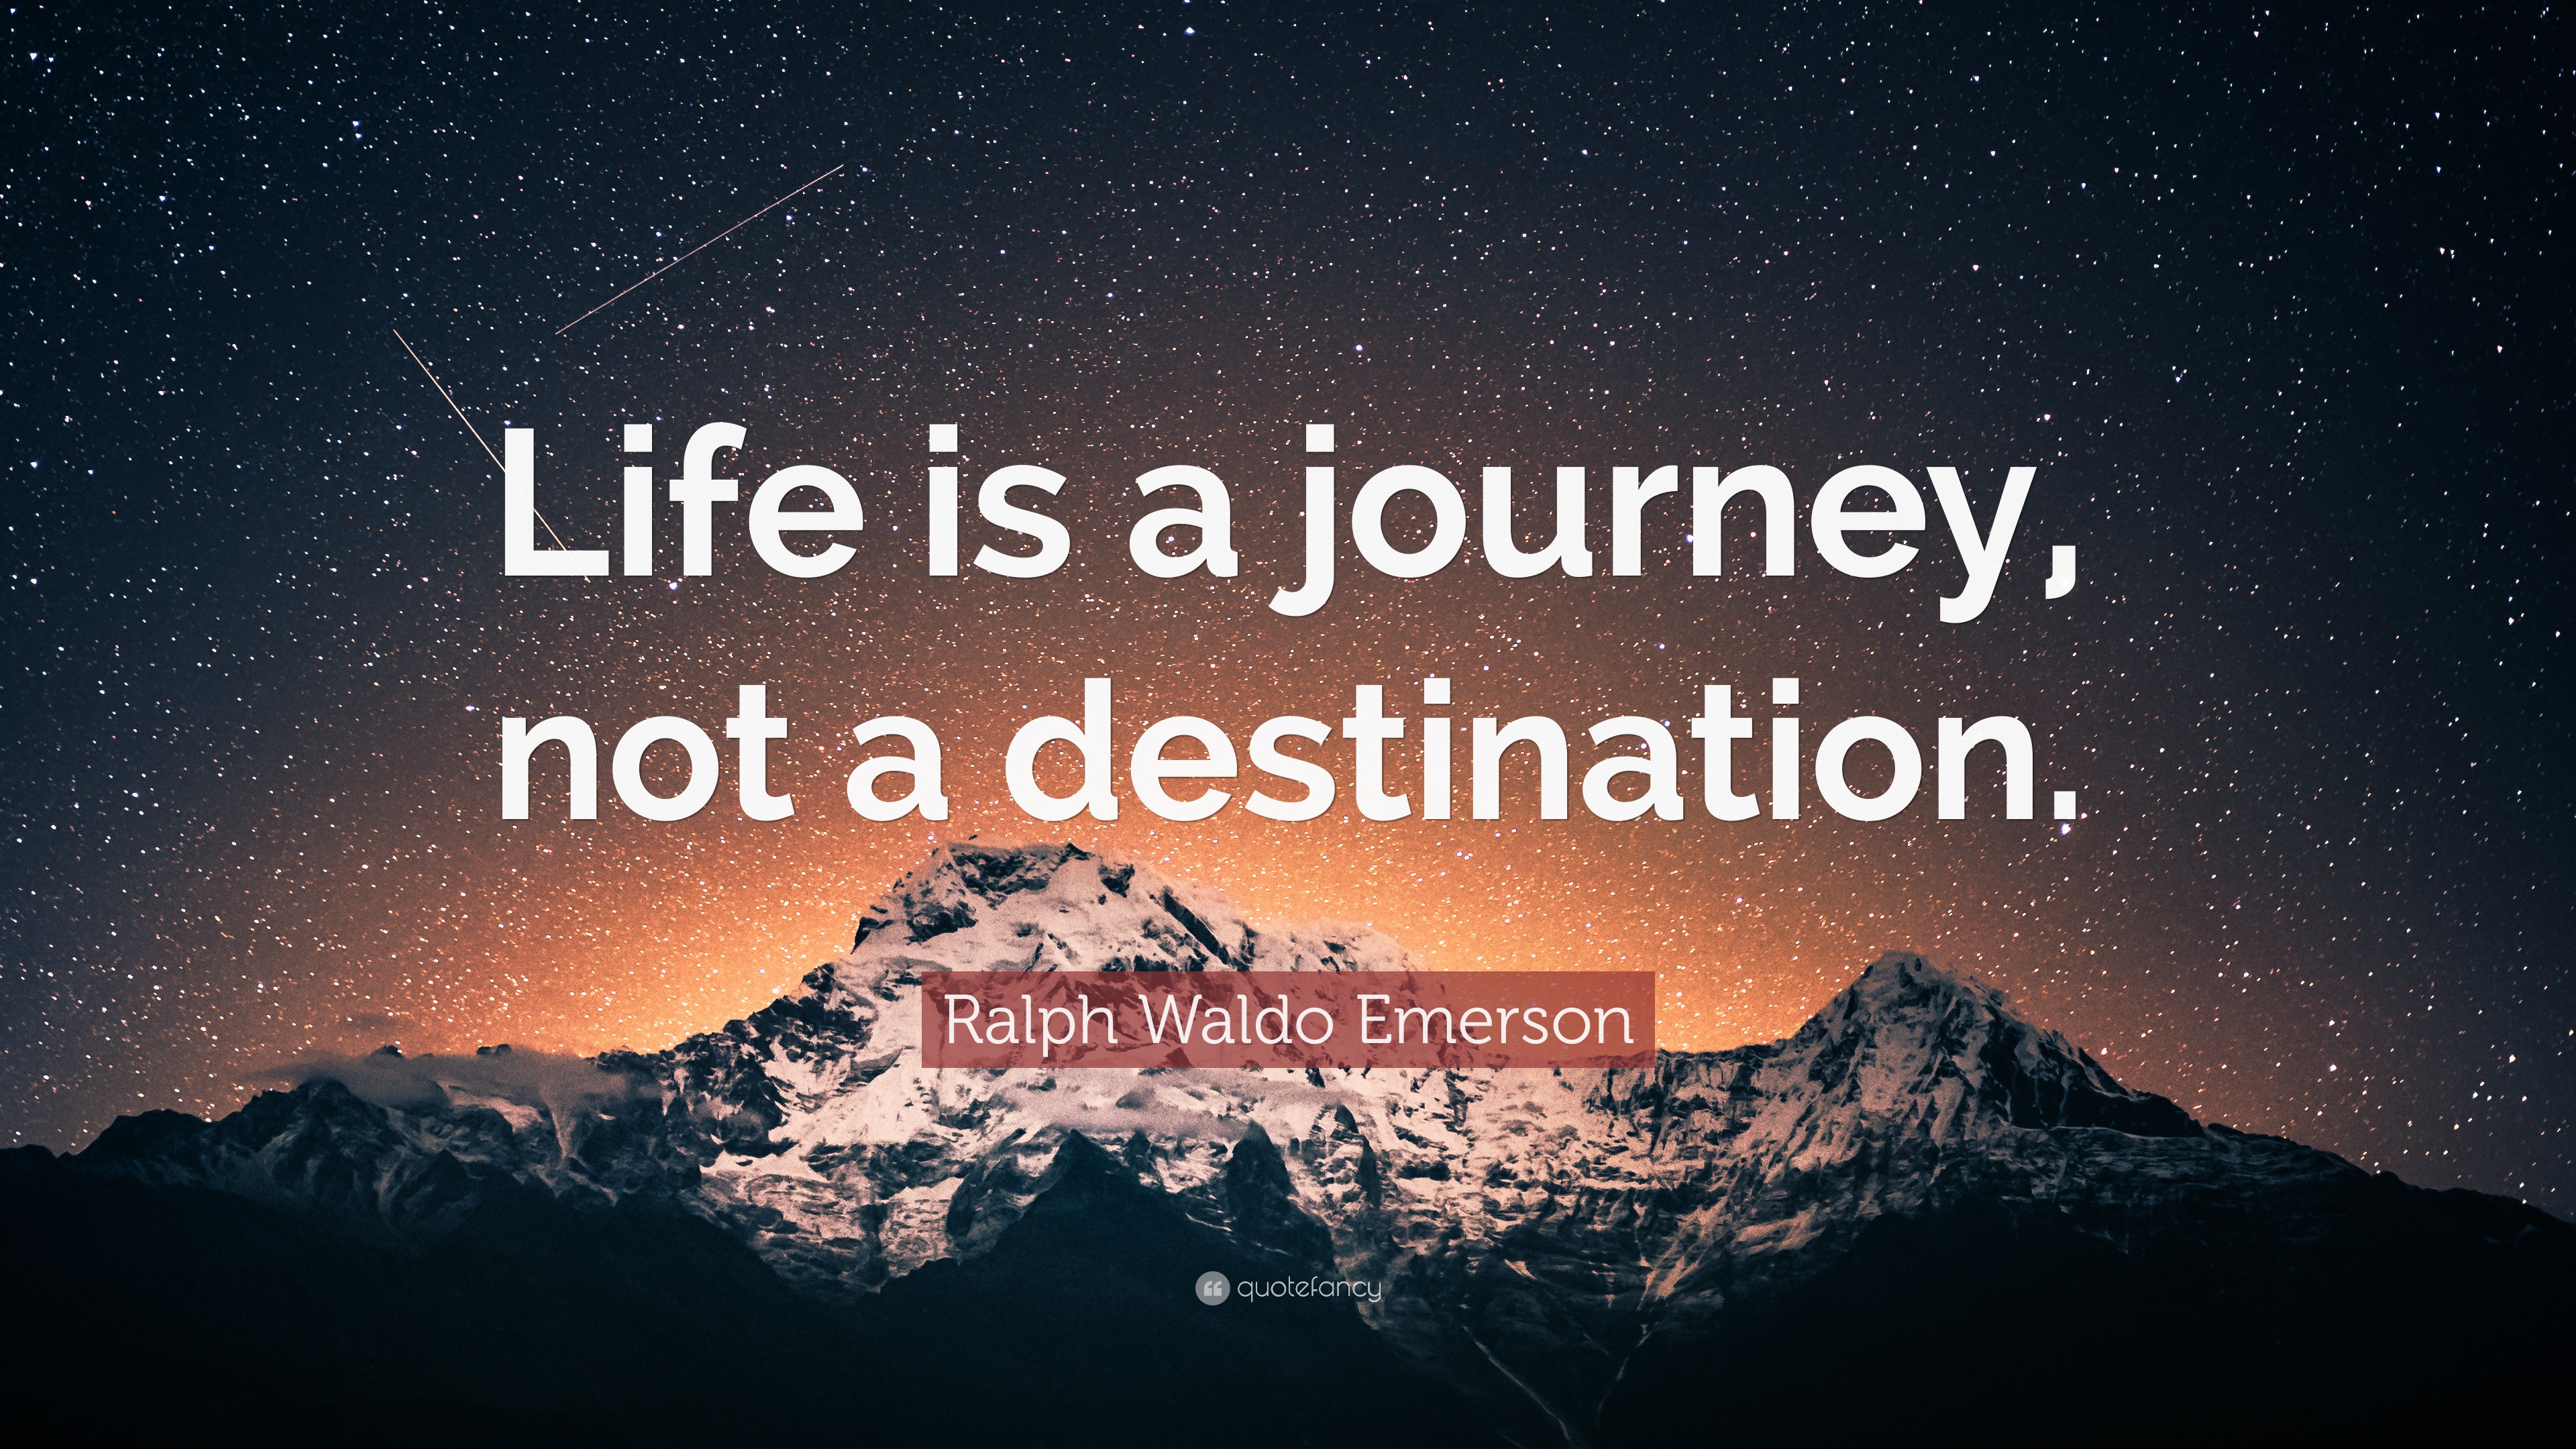 quote on life journey